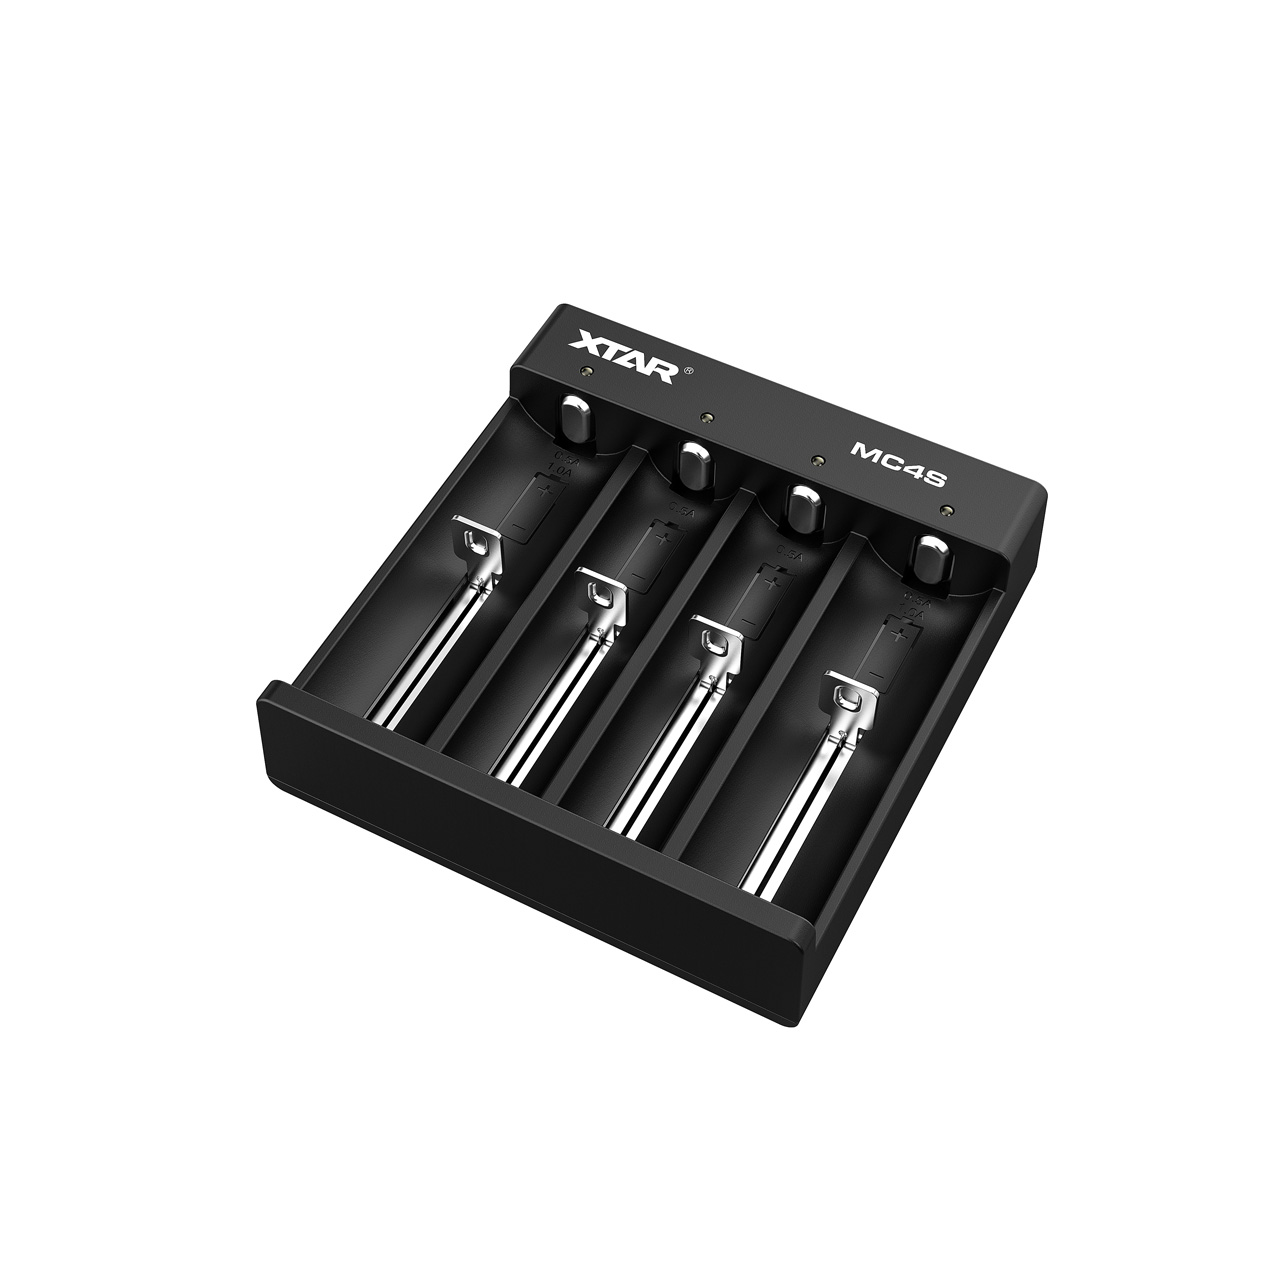 XTAR MC4S Battery Charger for NiMH & Li-ion Batteries